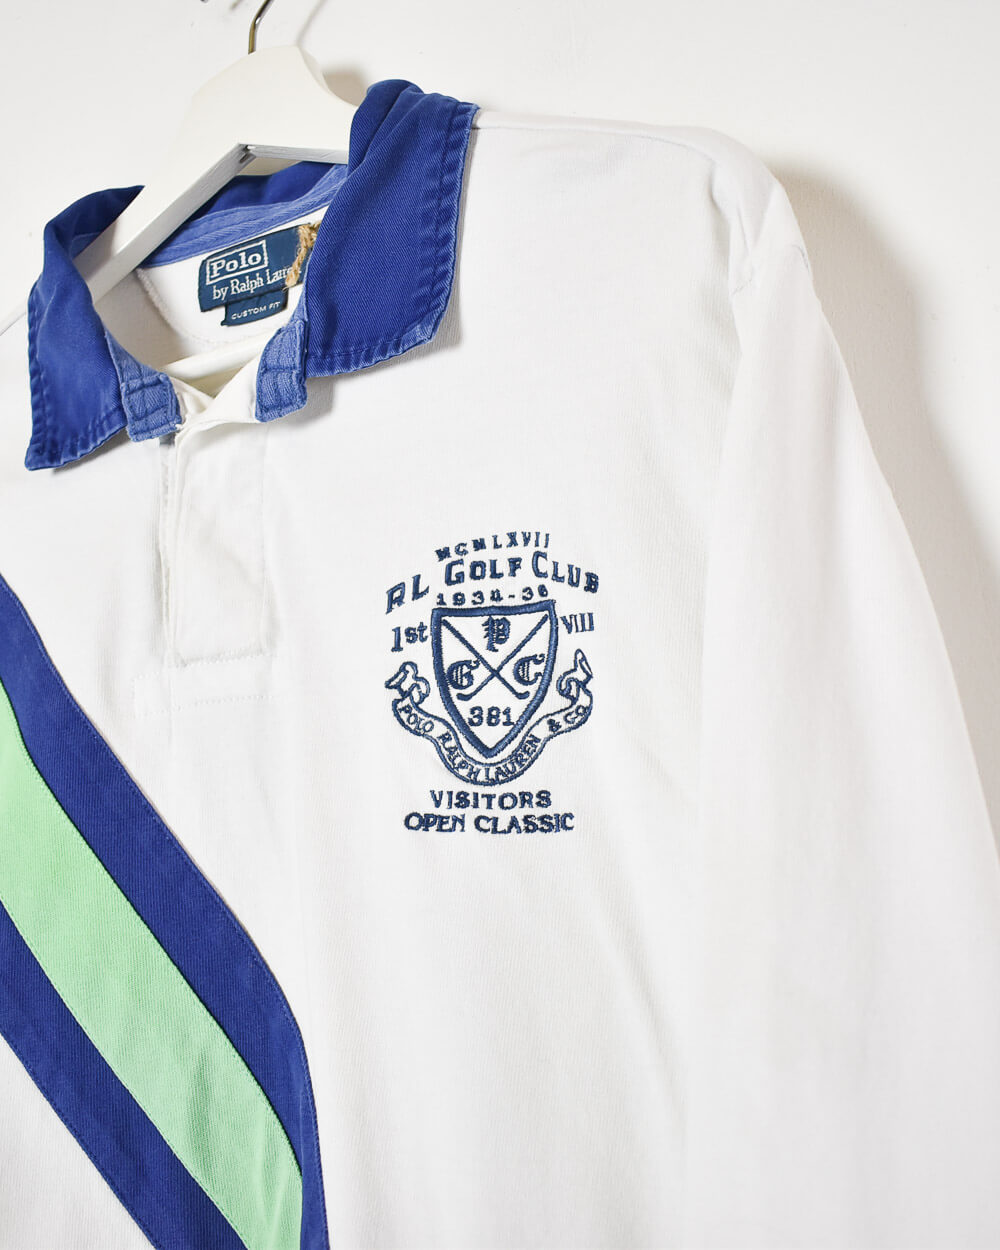 White Ralph Lauren Golf Club Rugby Shirt - X-Large